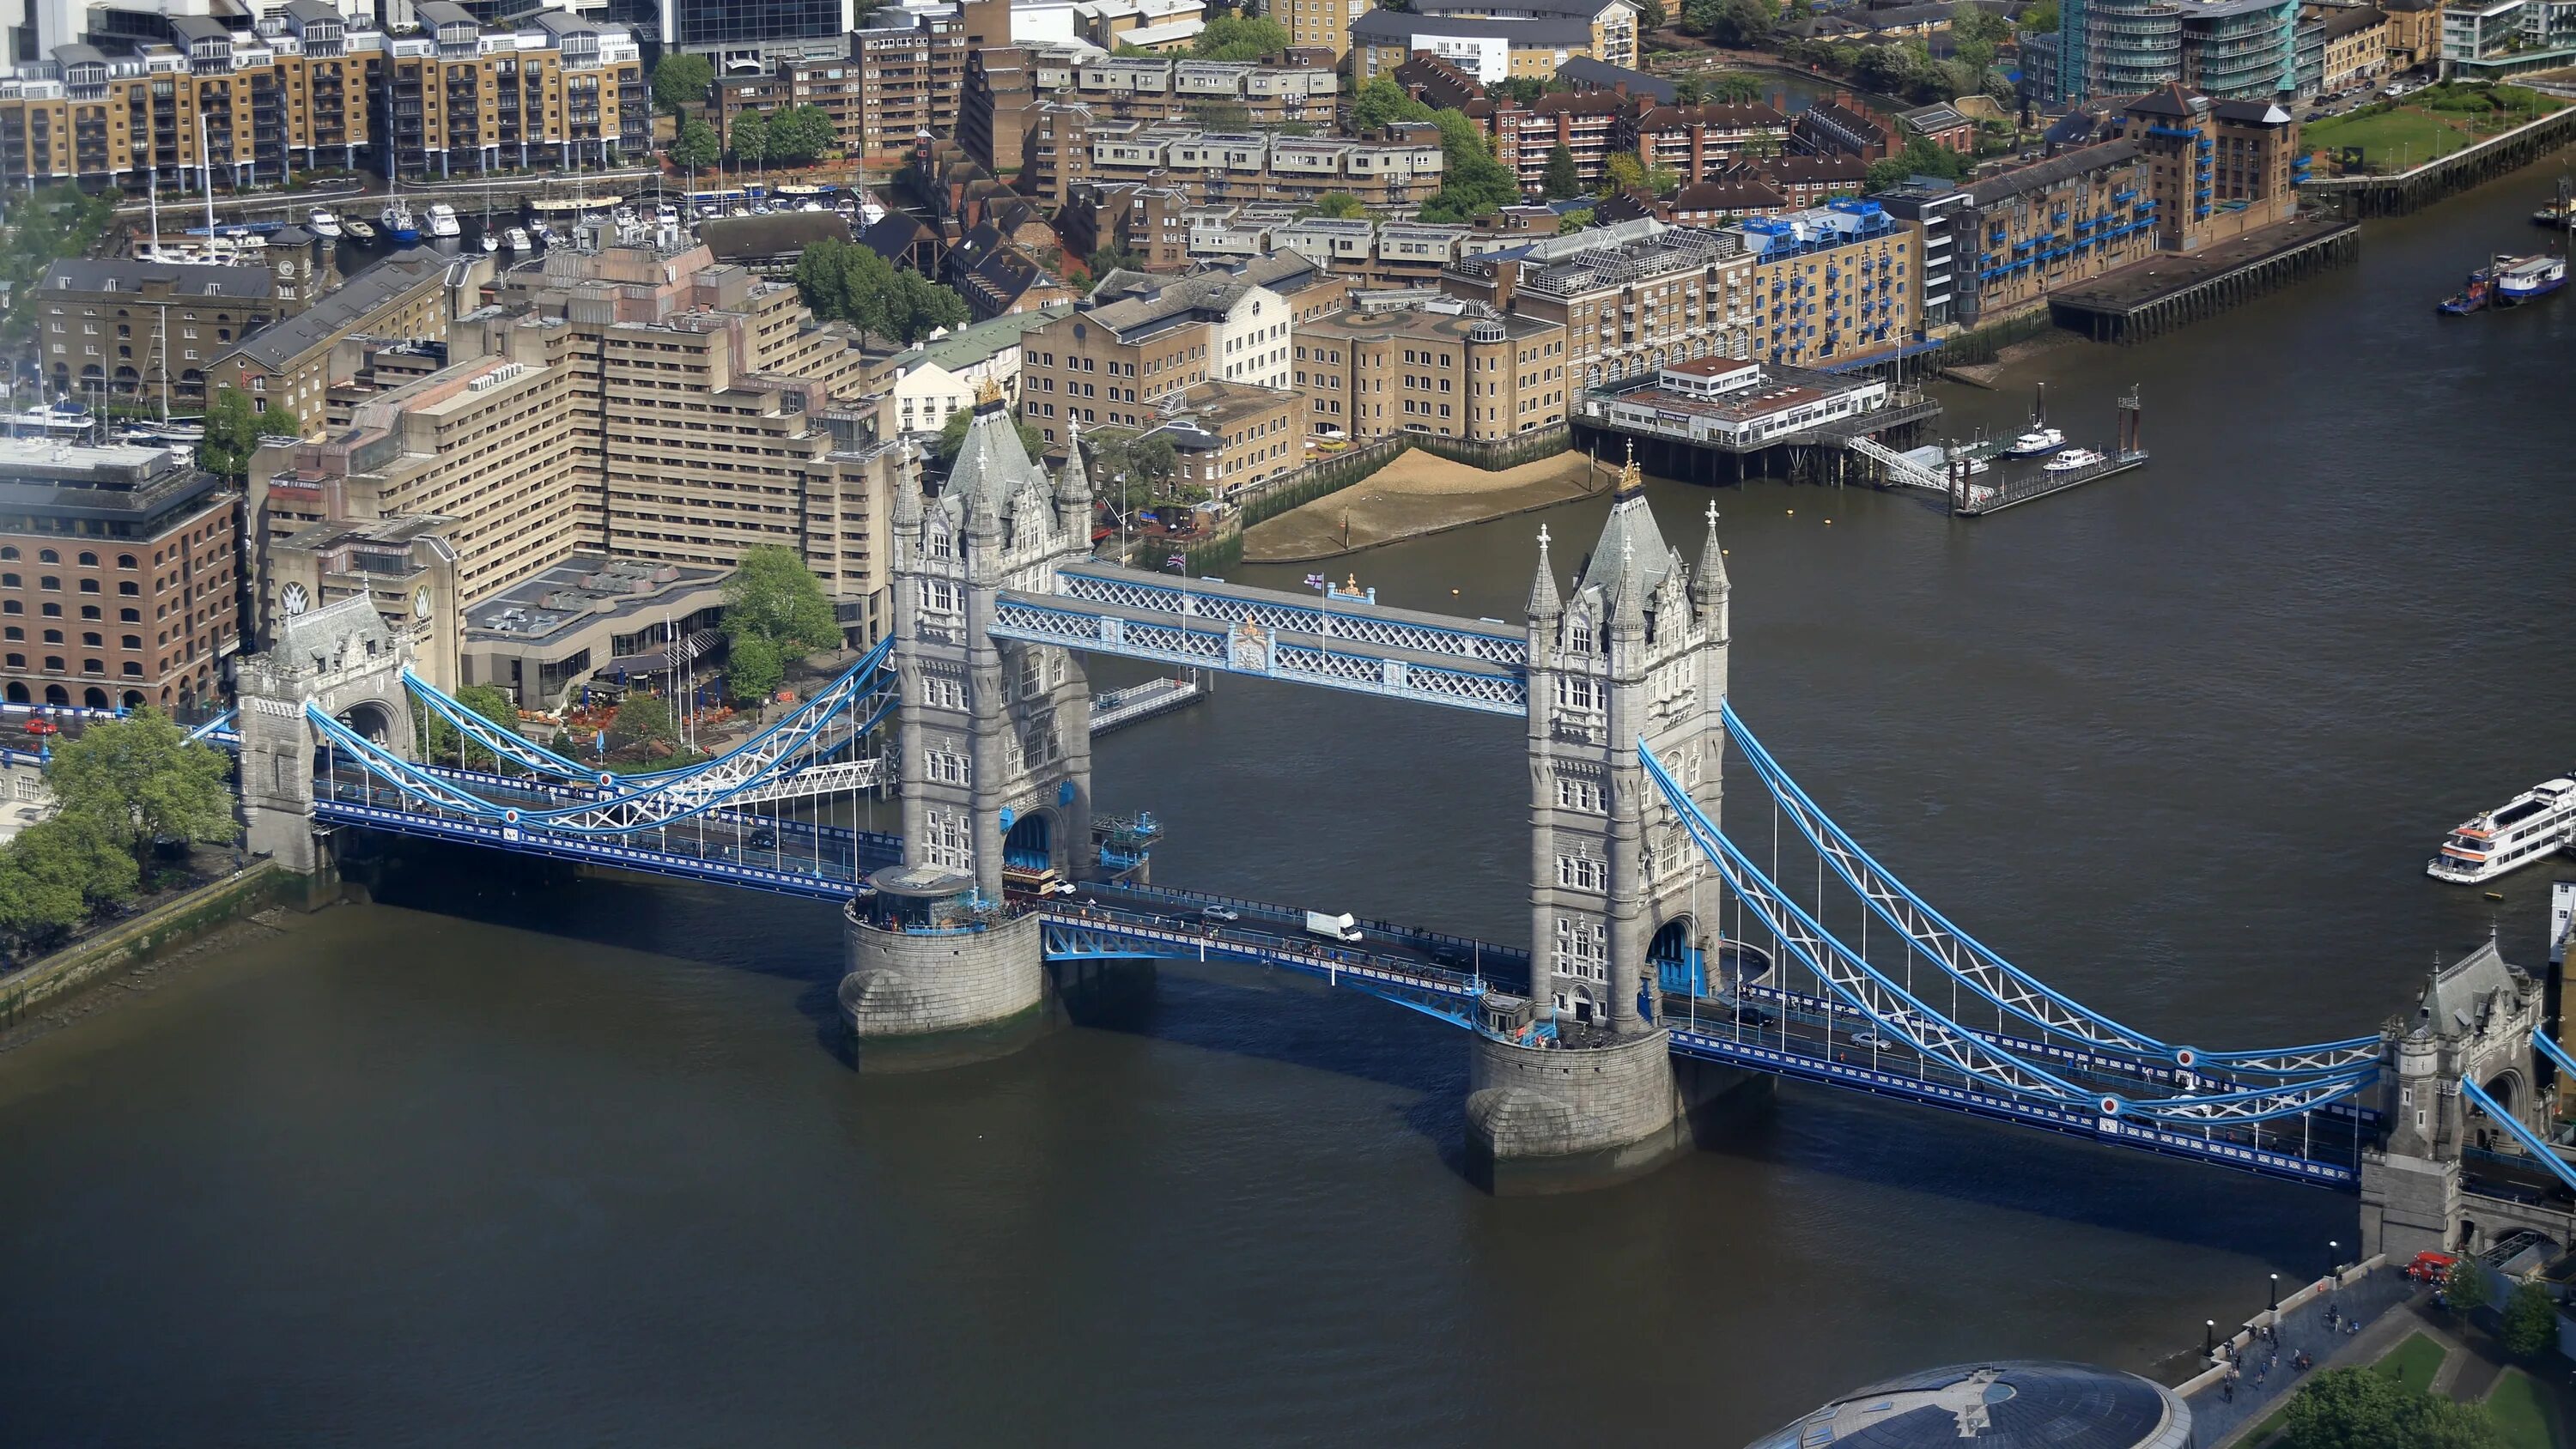 Мост Тауэр в Лондоне. Тауэрский мост мосты Лондона. Мост ТОВЕР бридж. Тауренский мост Лондон.